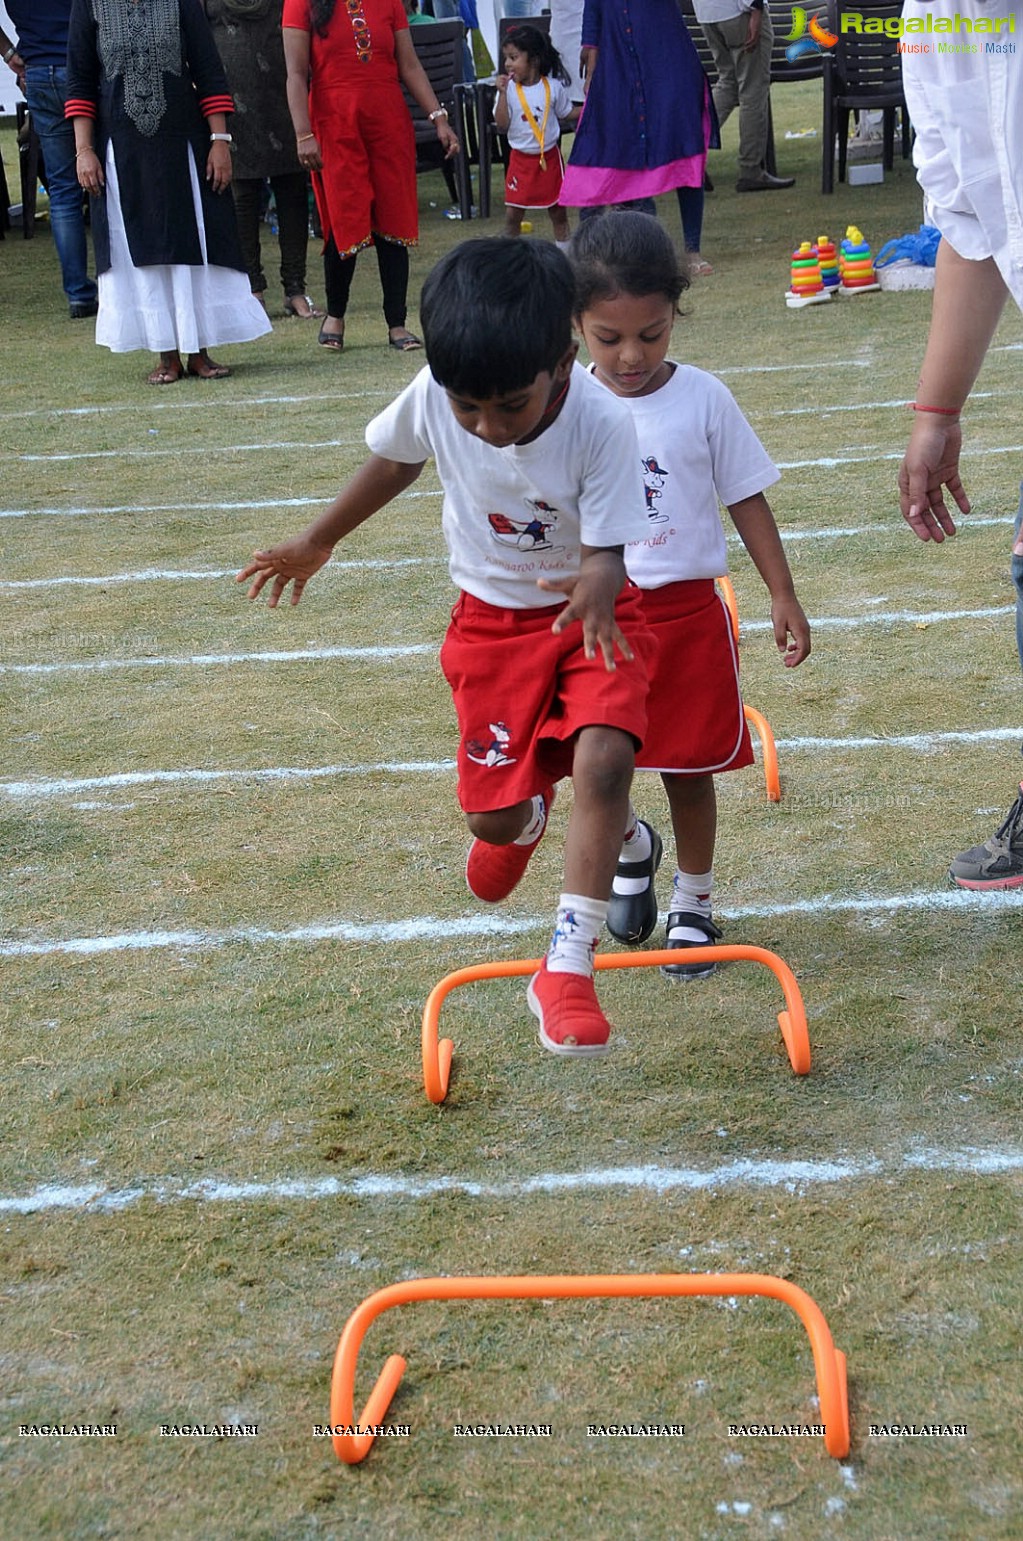 Sports Fiesta 2017 at Kangaroo Kids Pre-School, Shaikpet, Hyderabad